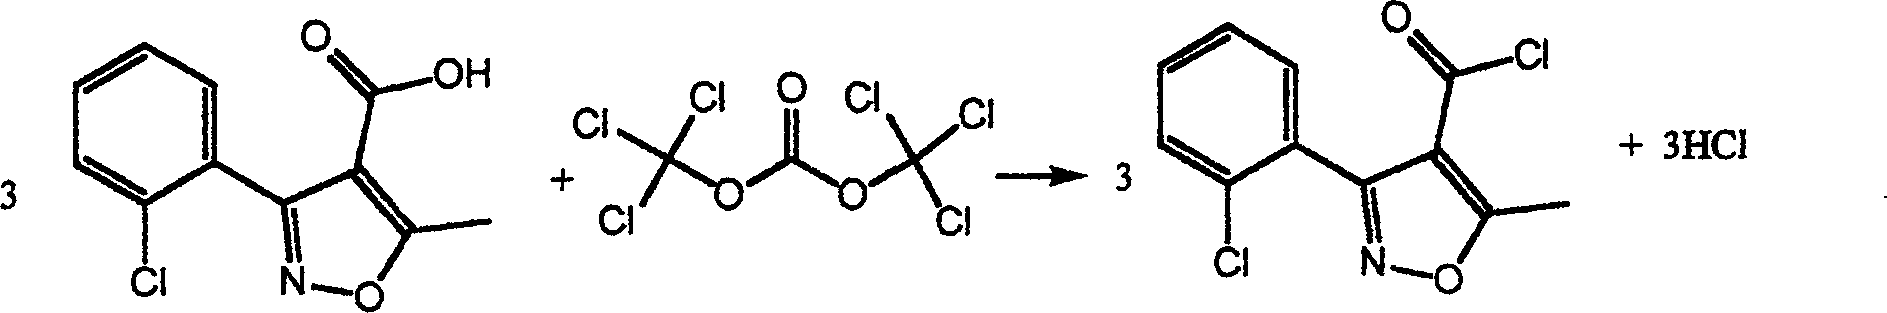 Chemical synthesis method of 3-(2-chlorophenyl)-5-methyl-4-isoxazole formyl chloride